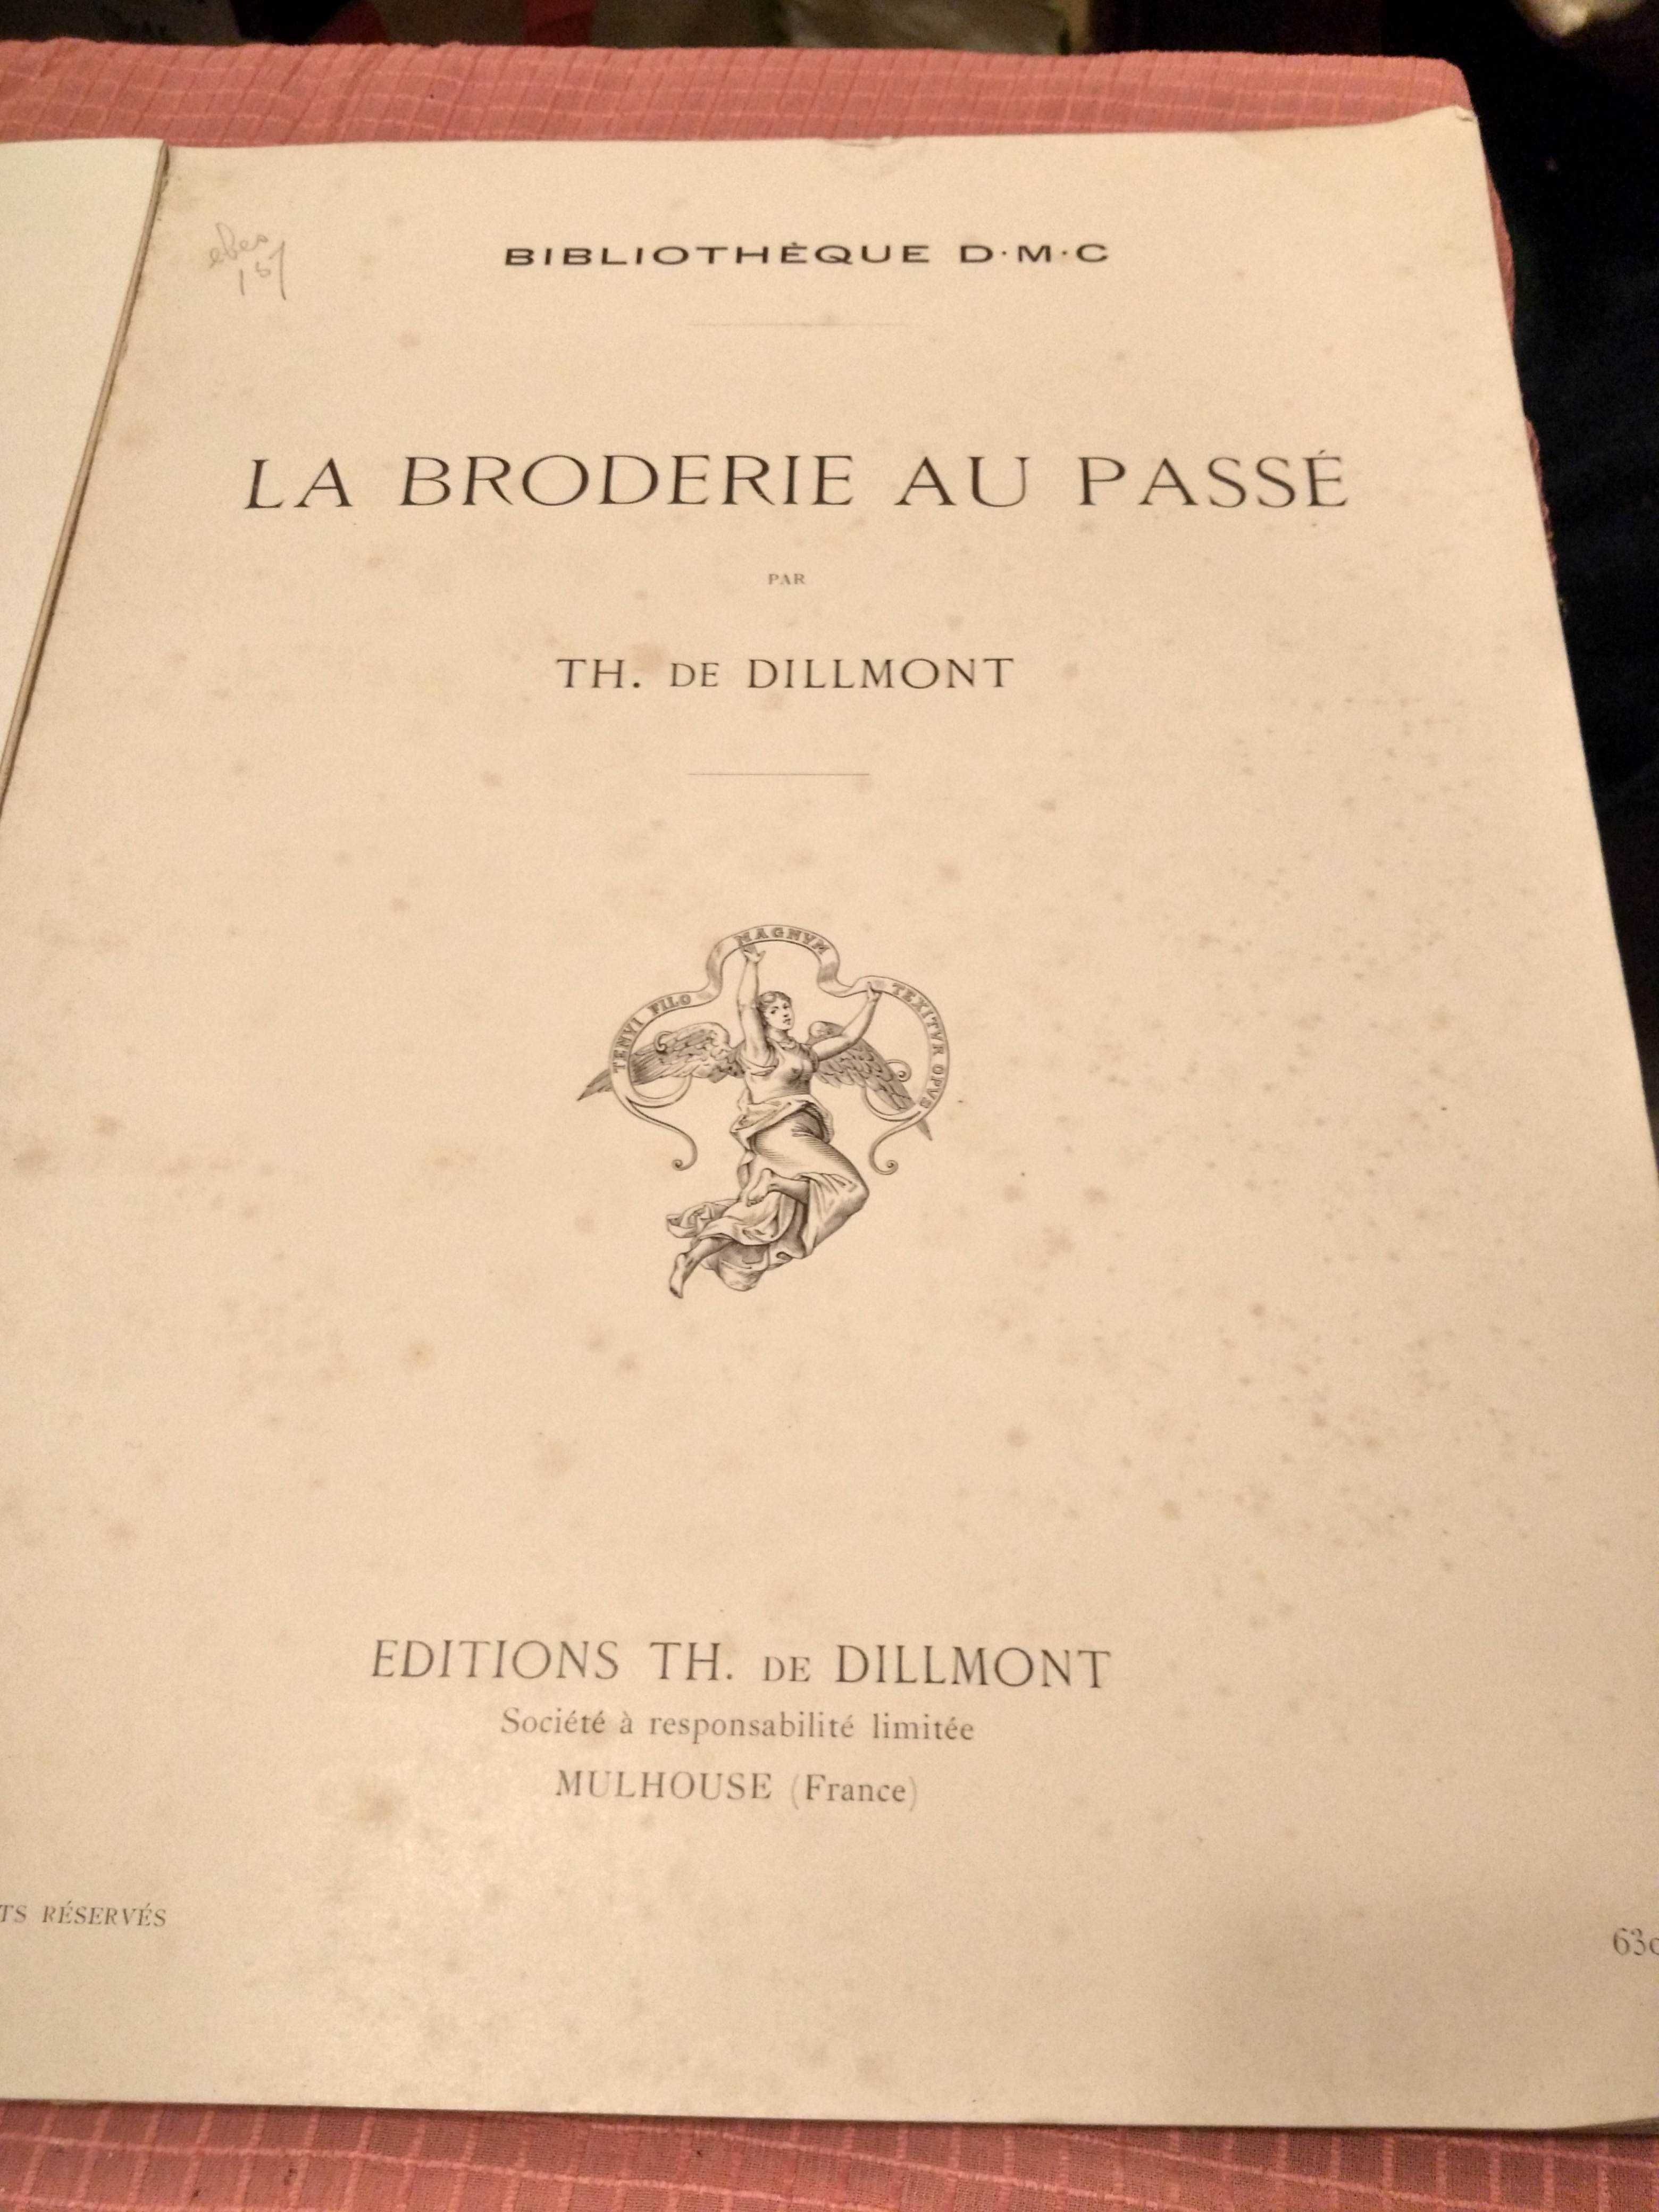 LA BRODERIE AU PASSE - livro francês de bordados, ano de 1910